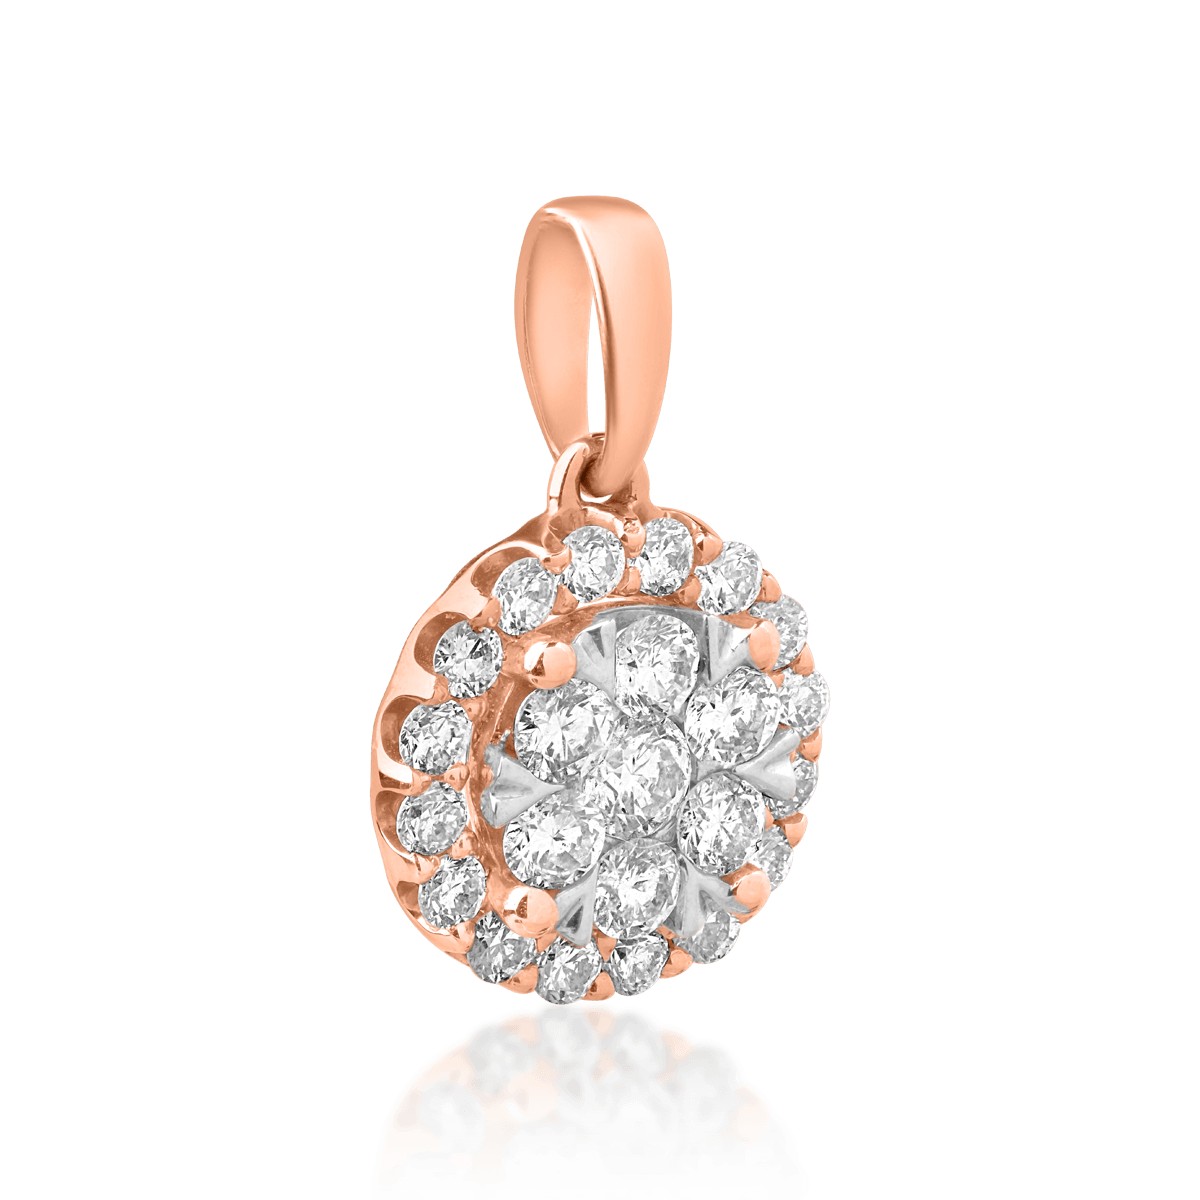 18K rose gold pendant with 0.5ct diamonds.